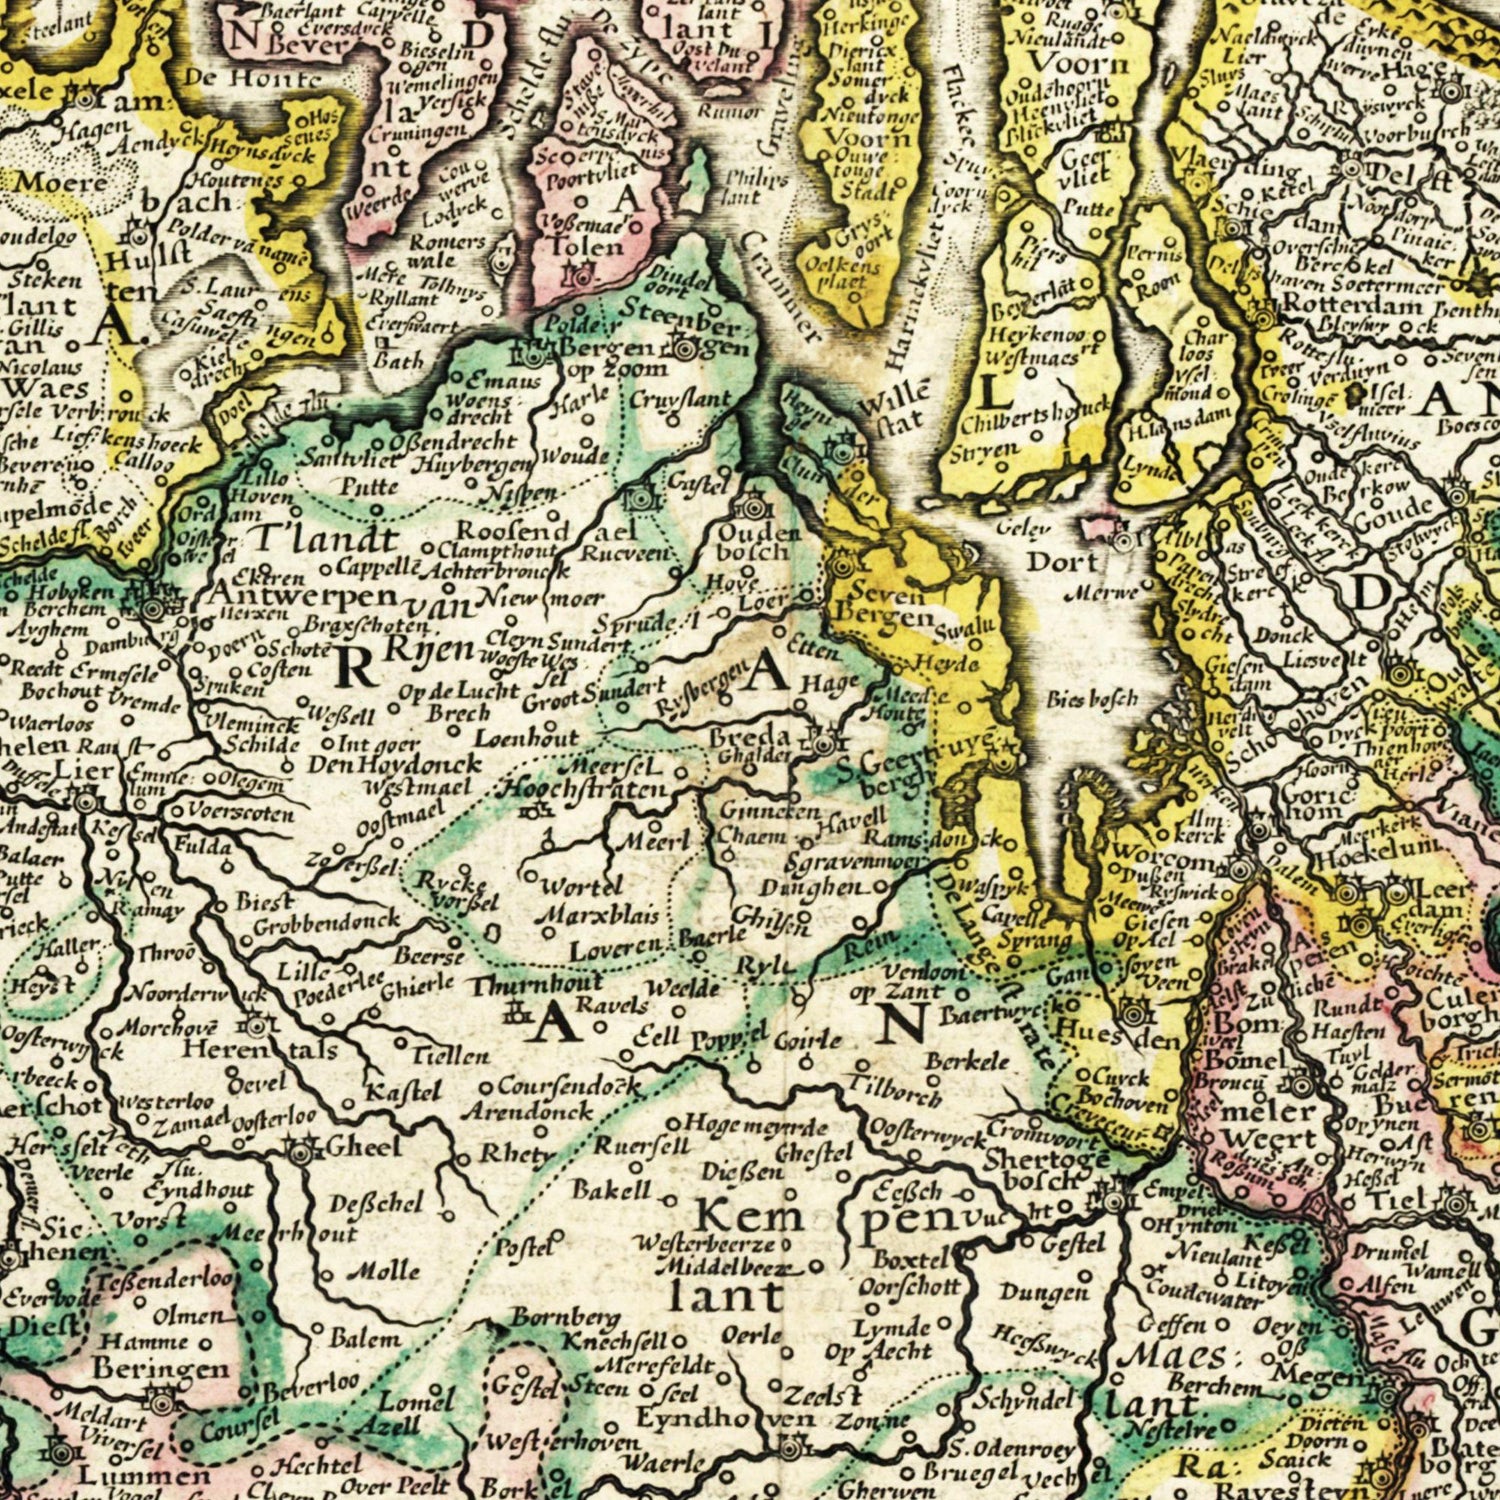 Landkarte Niederlande um 1647 | Kartenhandlung Rothert